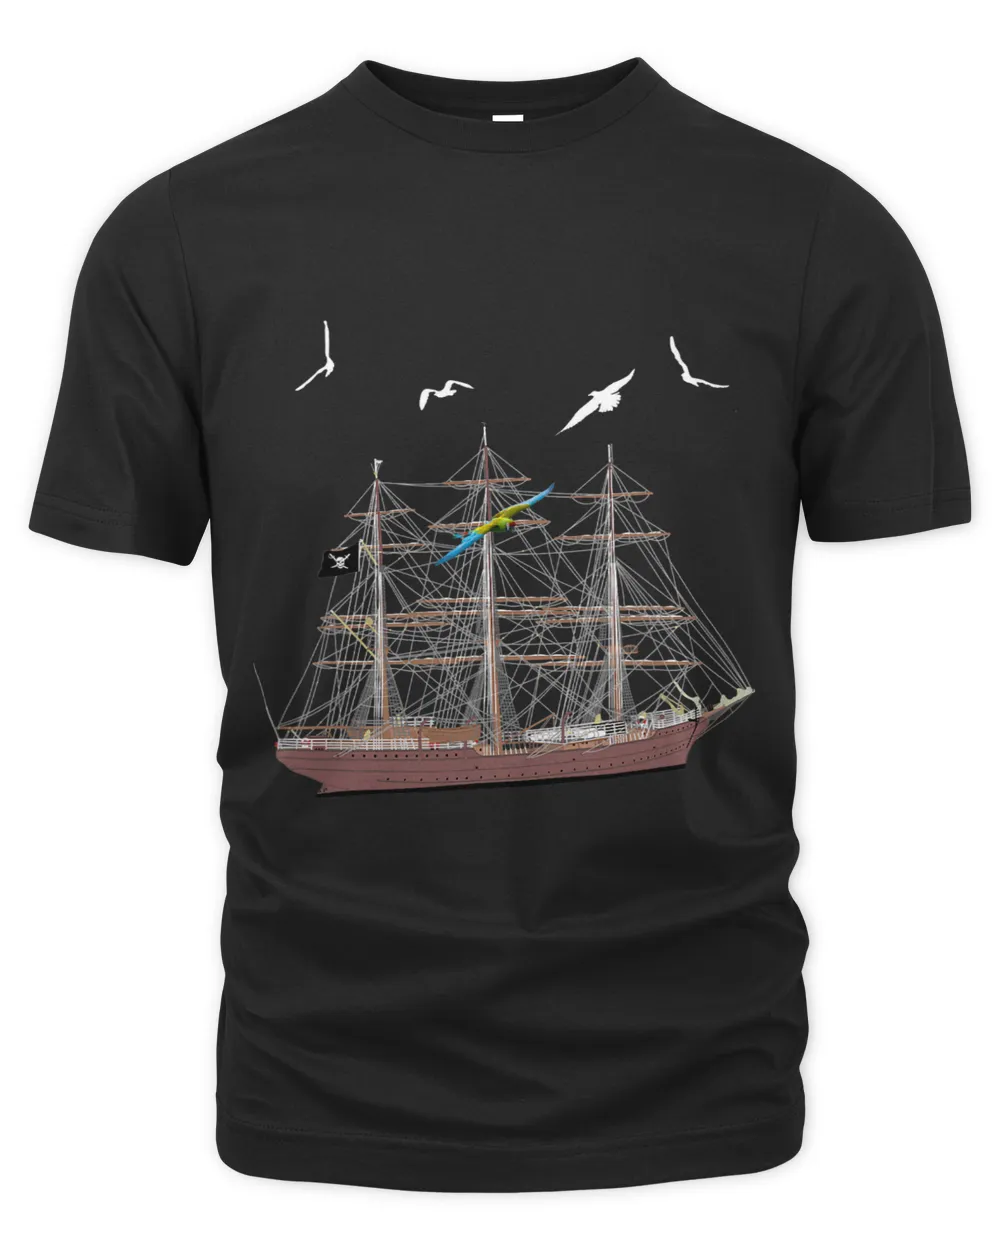 Sailing ship Full ship Pirate ship Macaw parrot Seagulls